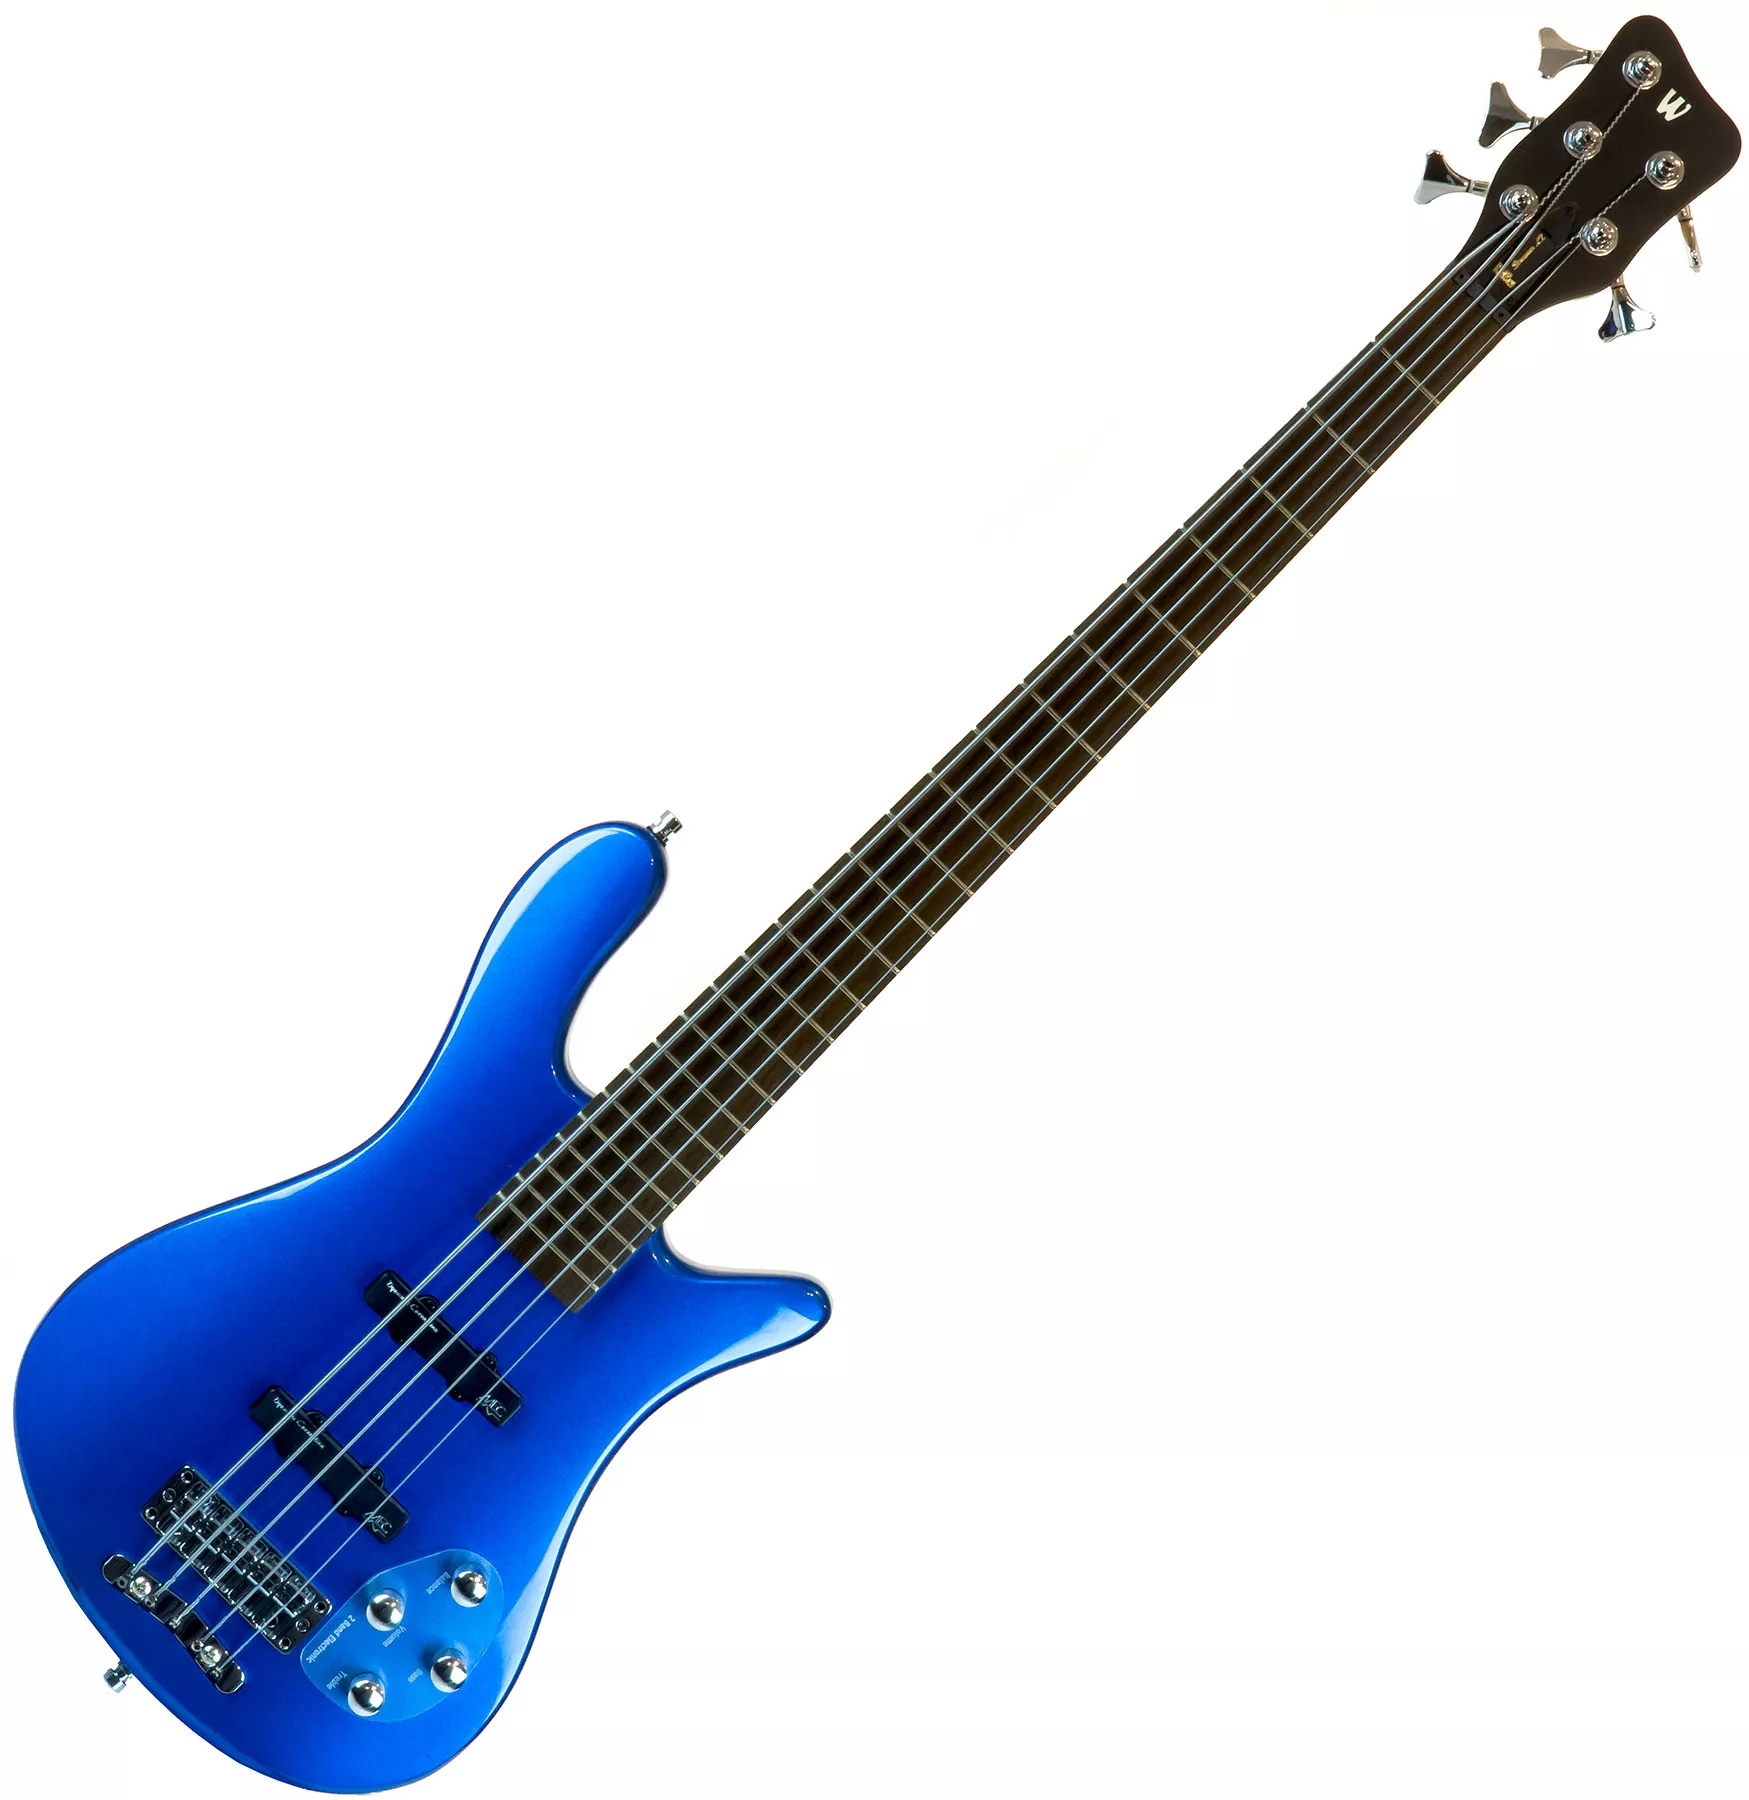 Warwick Rockbass Streamer LX 5 String +Bag - blue metallic blue